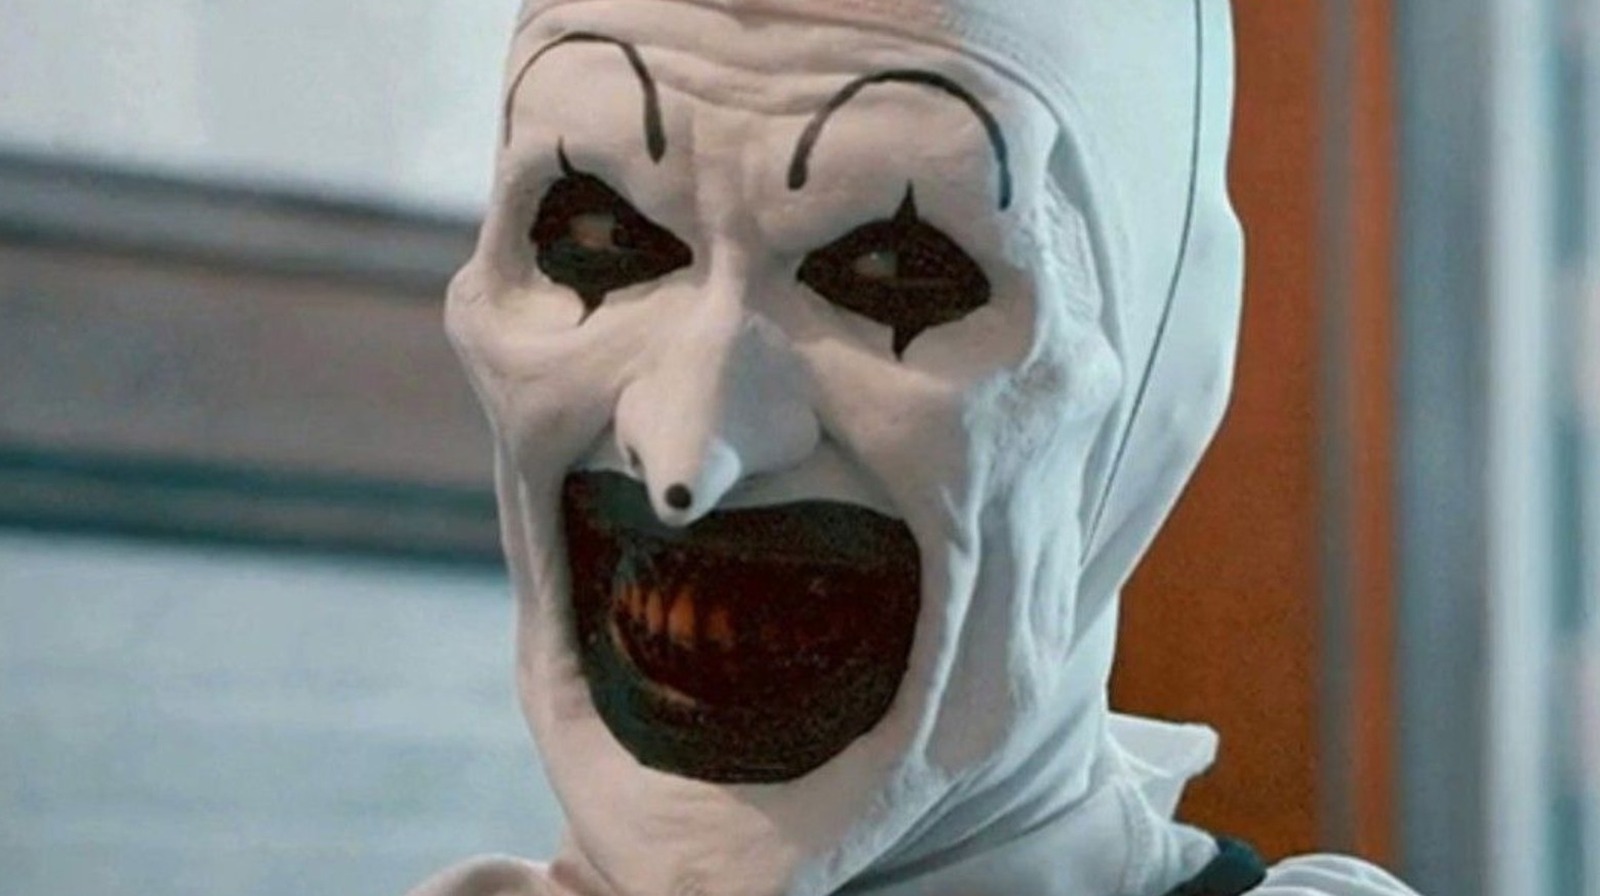 75 Scariest Horror Villains - Best Horror Movie Villains